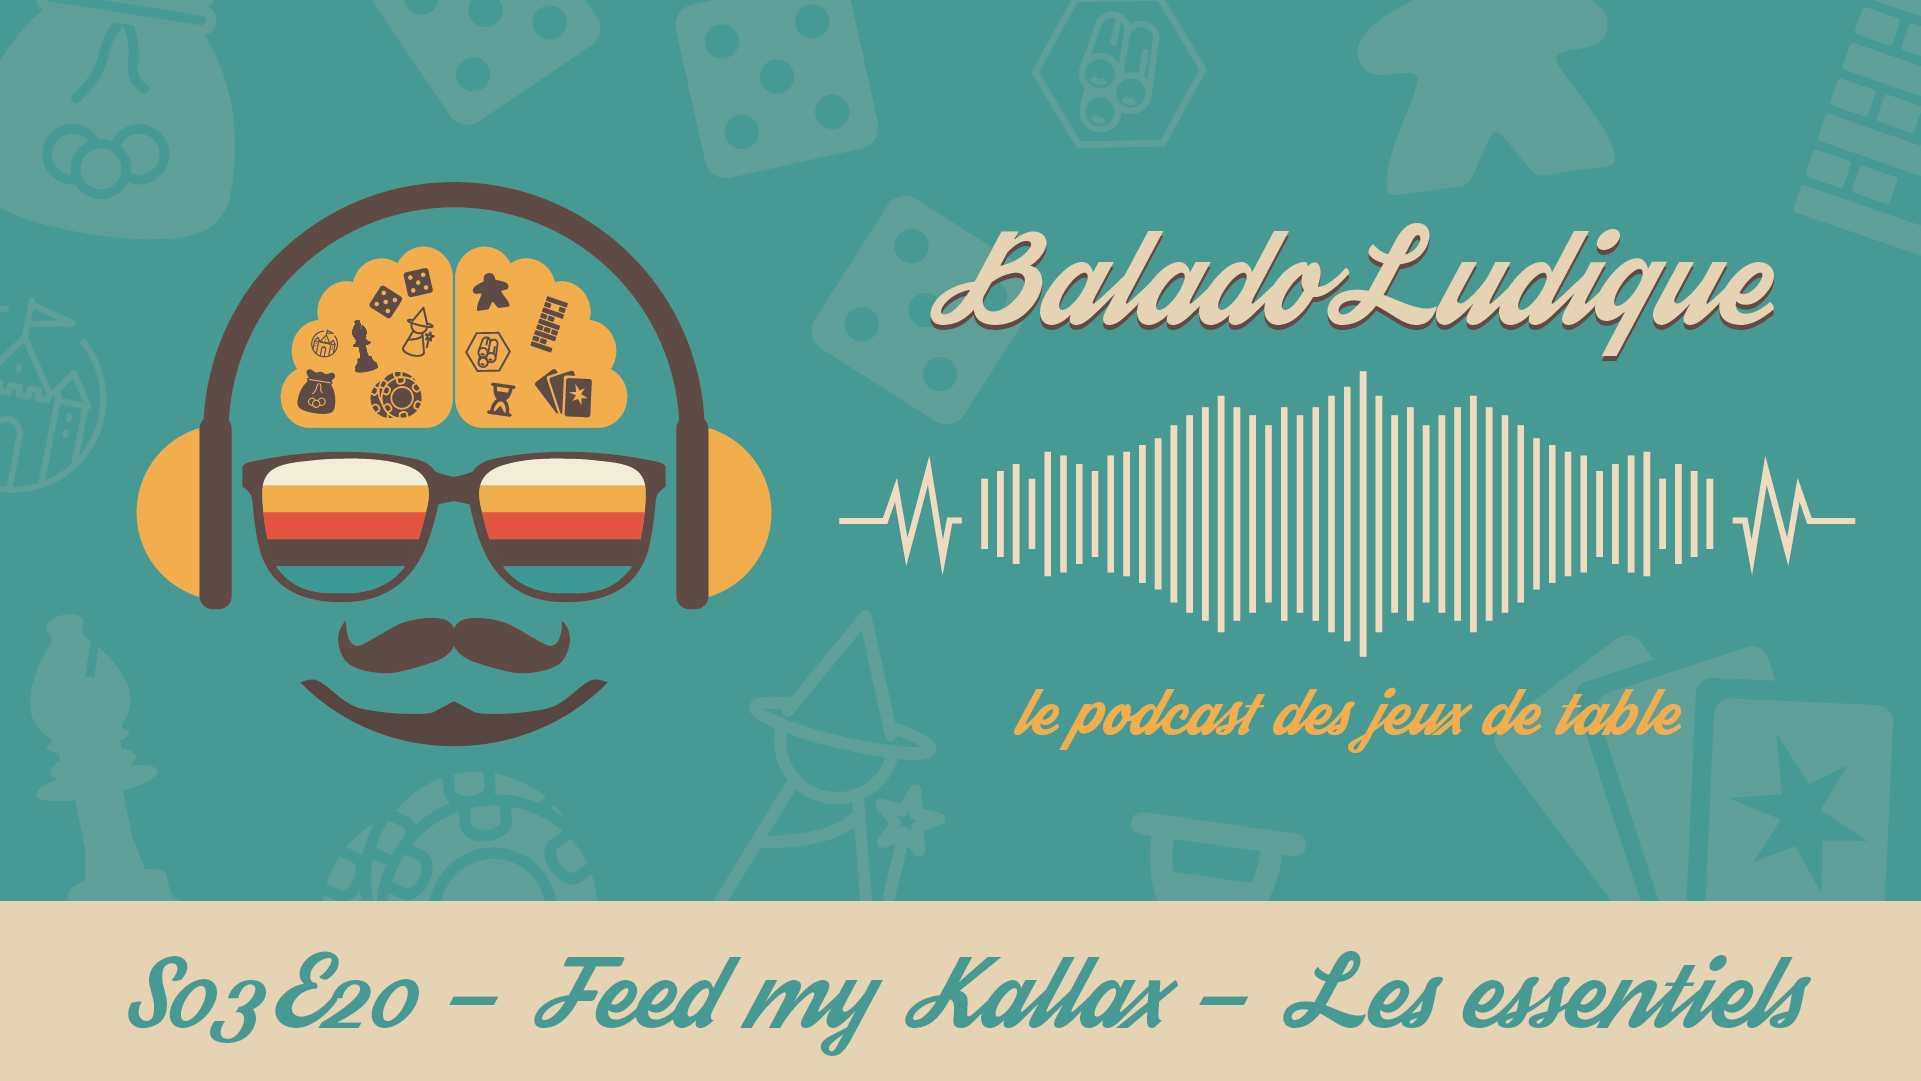 Feed my Kallax - Les essentiels - BaladoLudique - s03-e20